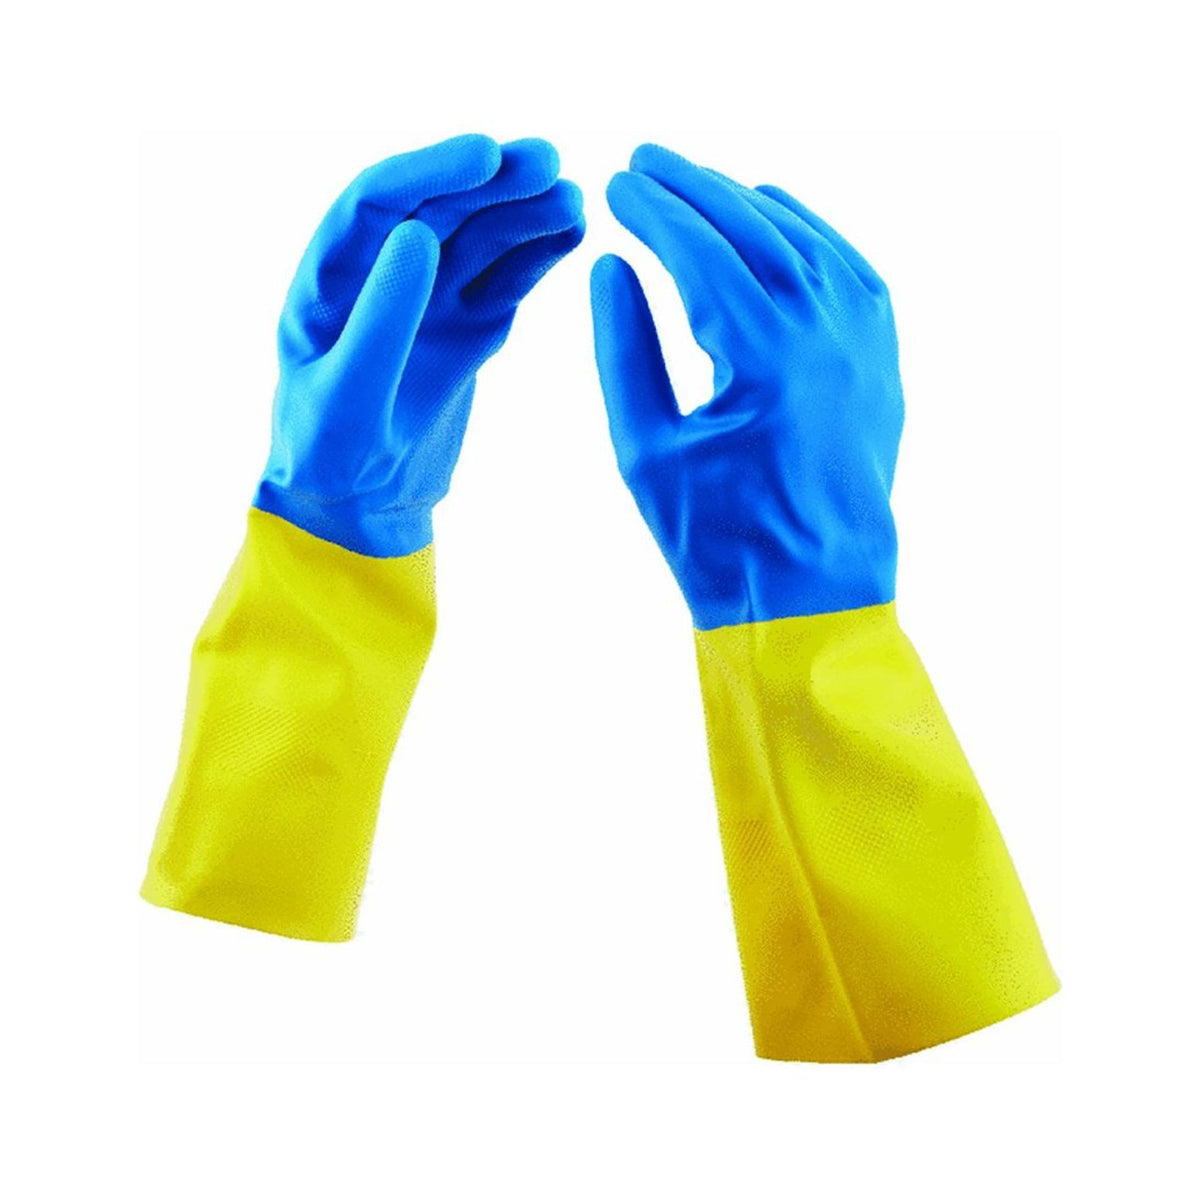 Spontex Latex Free Gloves Medium